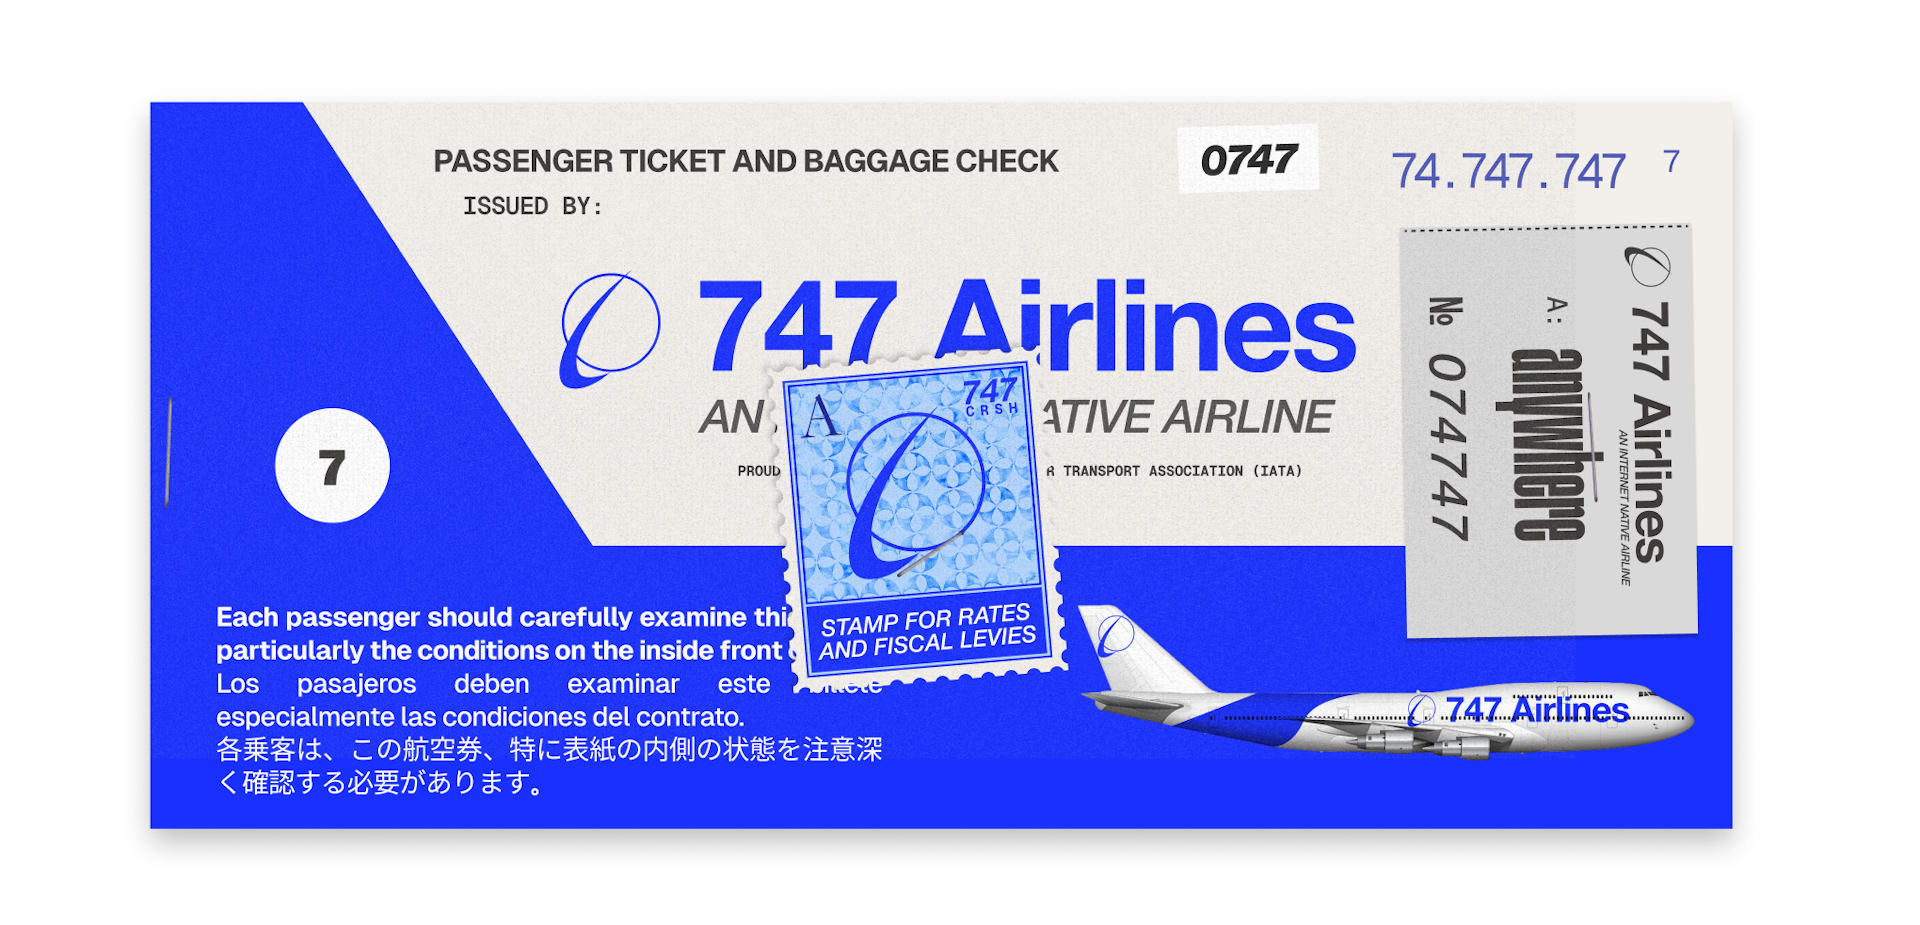 Passenger Ticket & Baggage Check